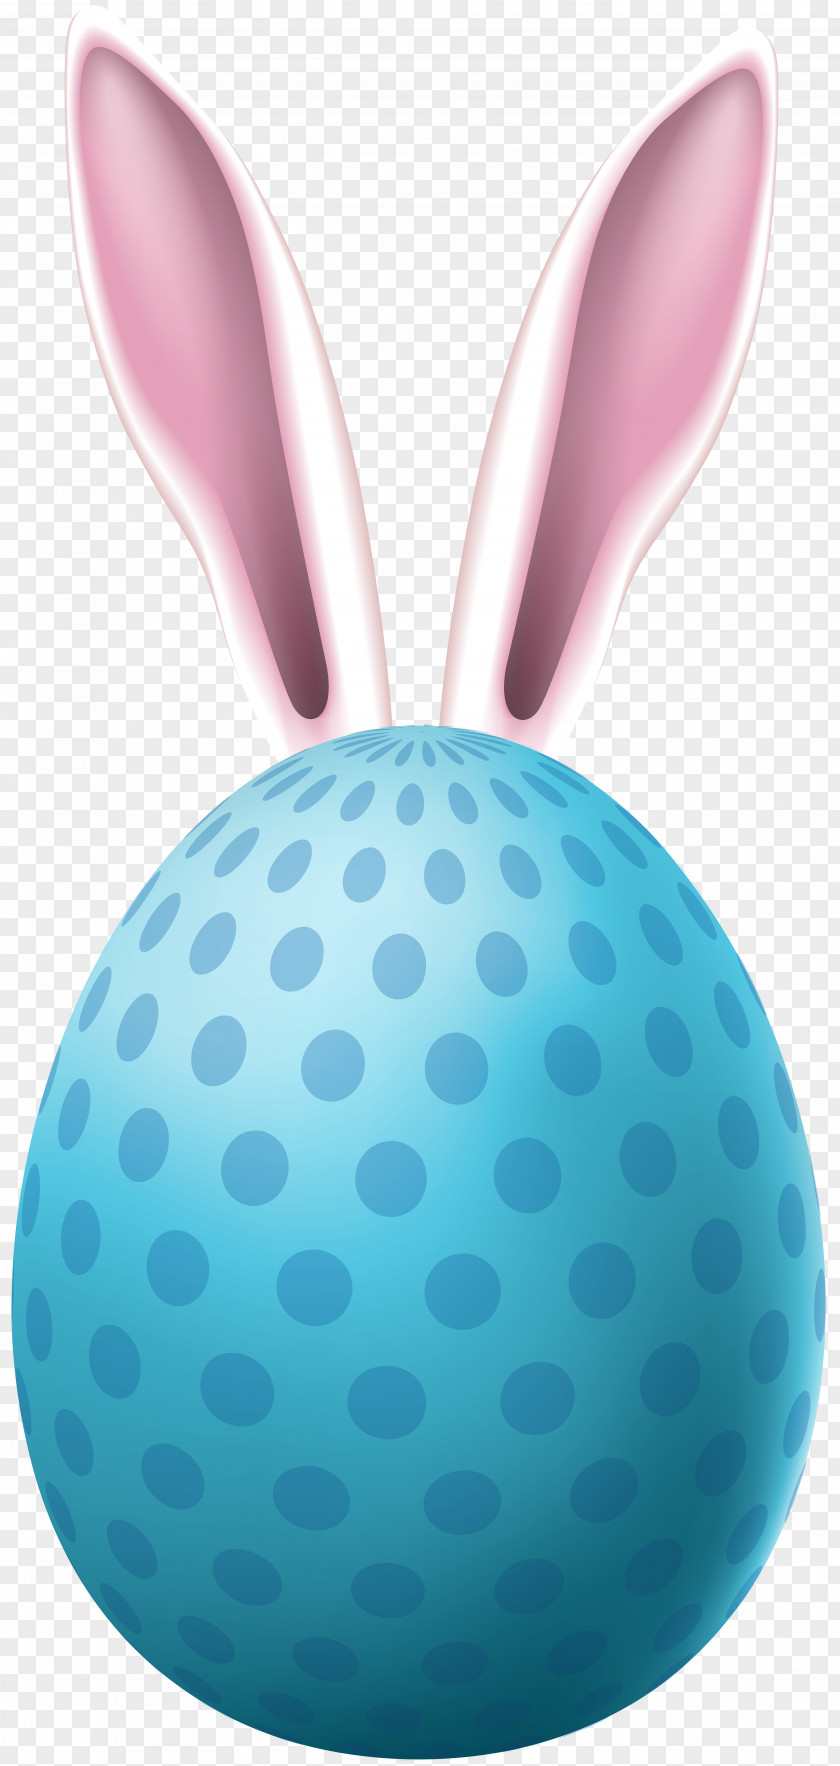 Pink Bunny Ears Rabbit Easter Egg Clip Art PNG